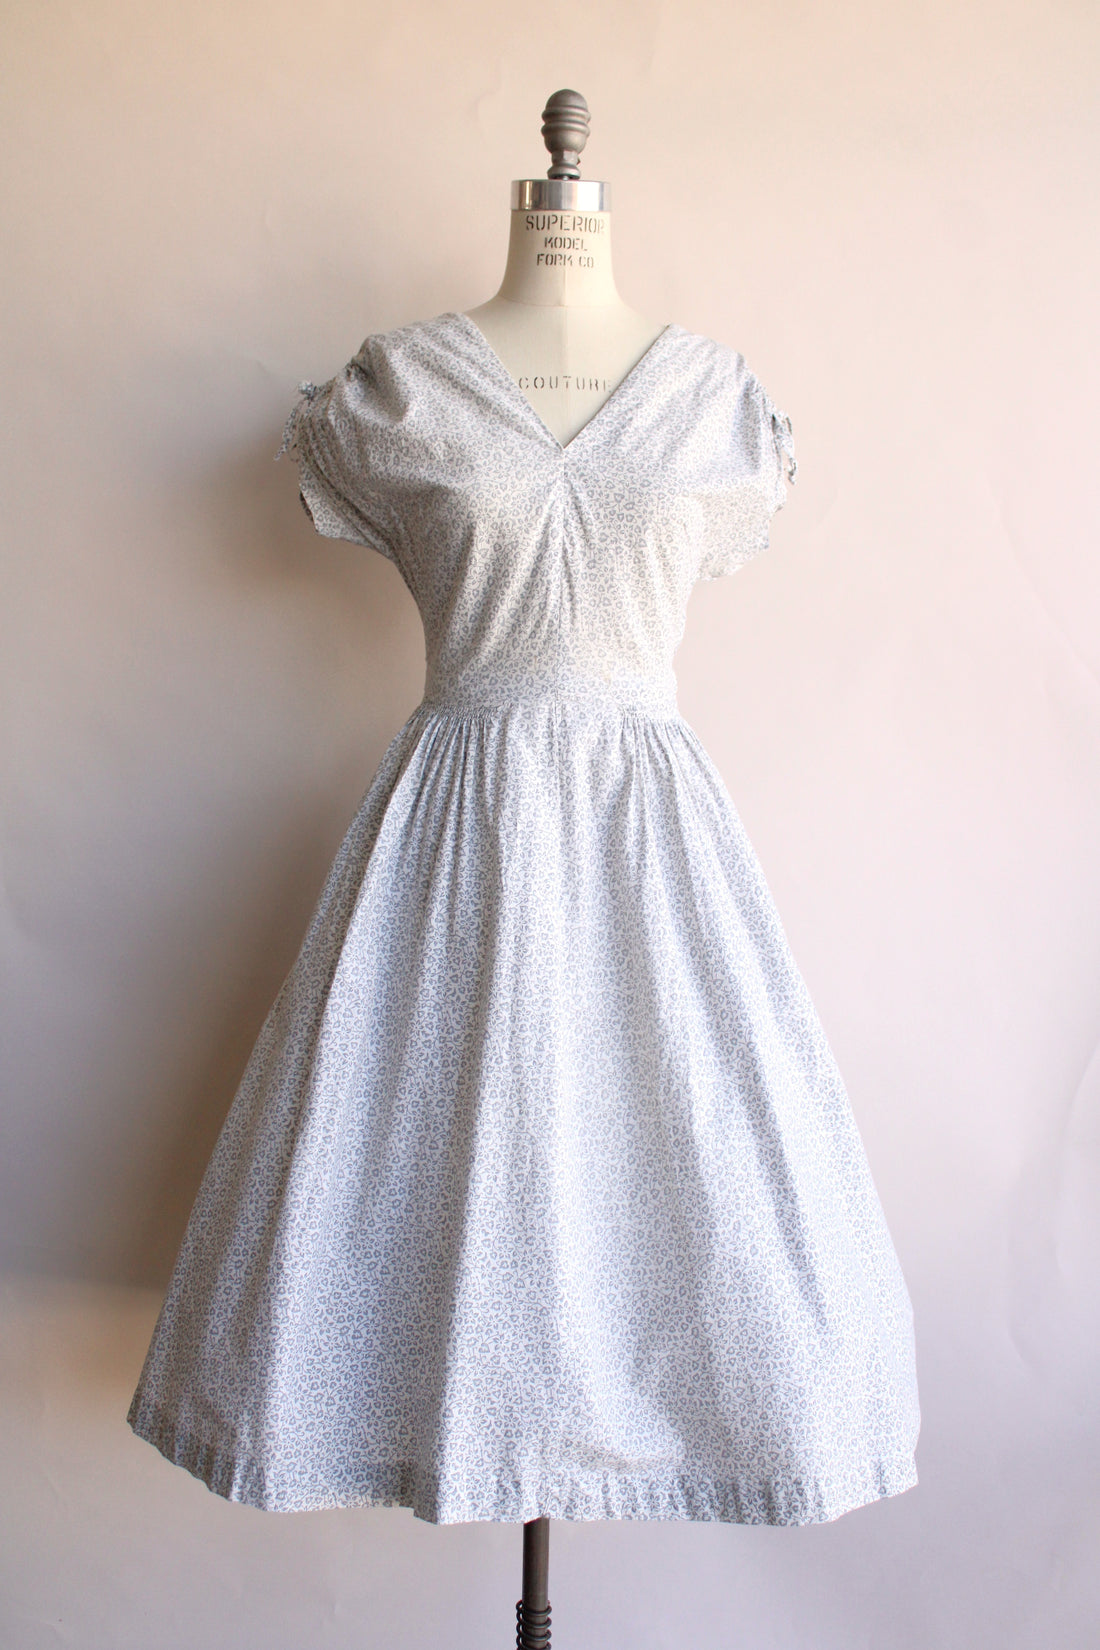 Vintage 1950s Gray Floral Sun Dress – Toadstool Farm Vintage